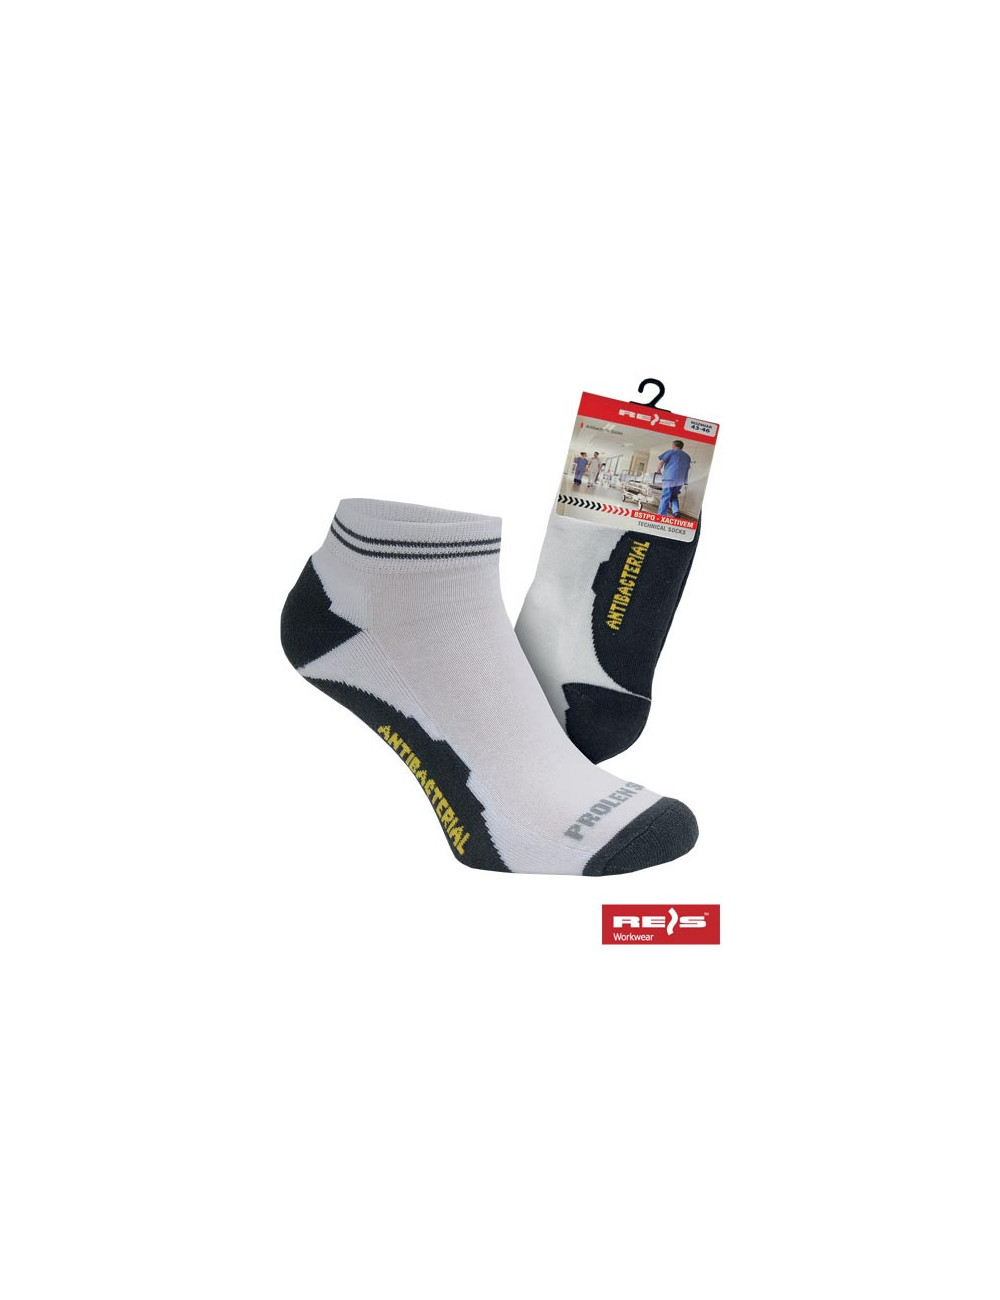 Socks bstpq-xactivem ws white-grey Reis